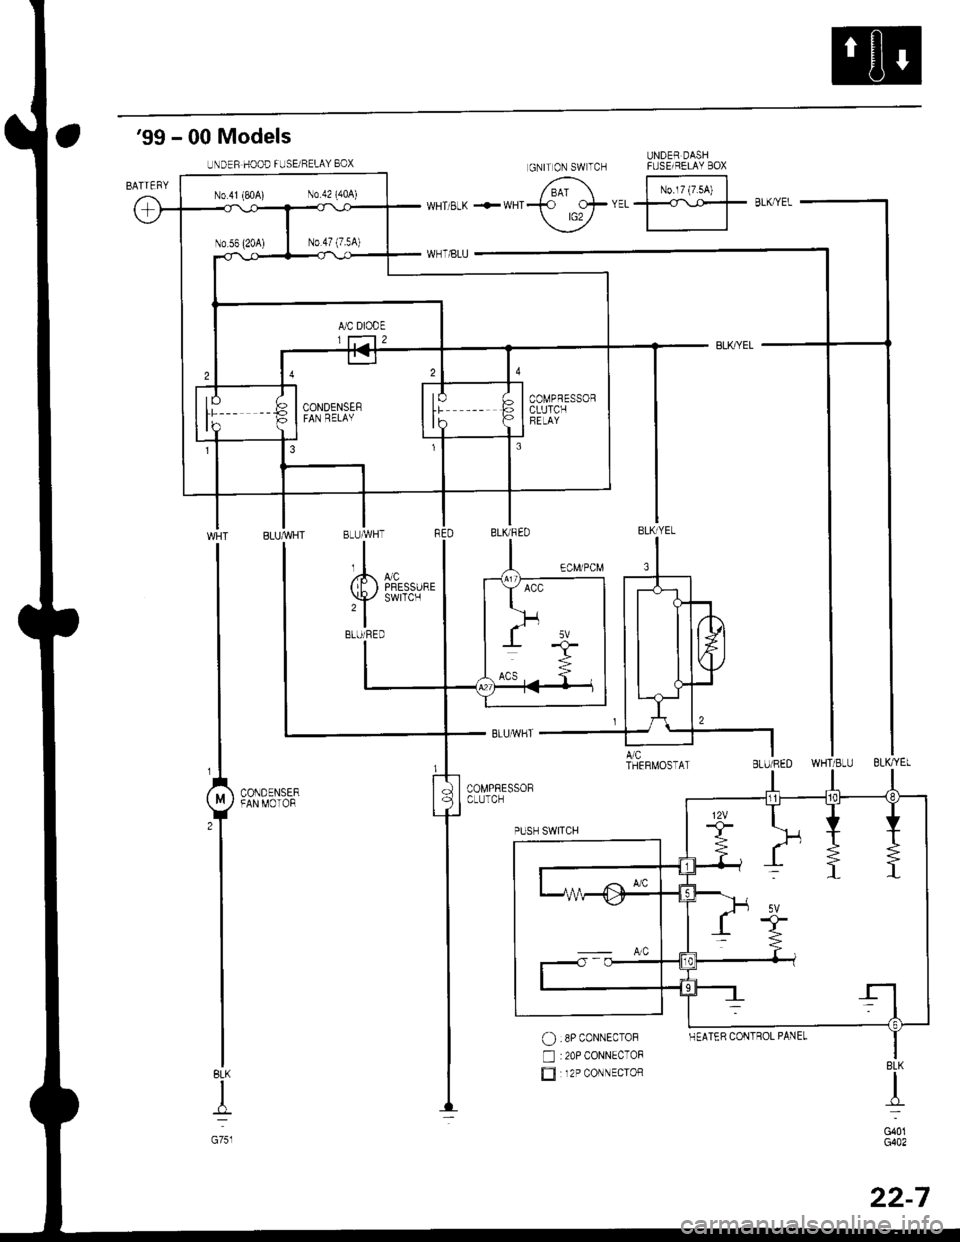 HONDA CIVIC 1996 6.G Workshop Manual 99 - 00 Models
UNDER DASHFUSE/BELAY BOX
No.l7 (7.54)
BLK
I
G751
$*"
O :8P coNNEcToF
n :20P CONNECToF
E 12P coNNEcroRBLK
d-
G401G402
UNDER HOOD FUSE/RELAY 8OX
N0.41 (P,0A) N0.42 (404)
COMPRESSORCLUTCH